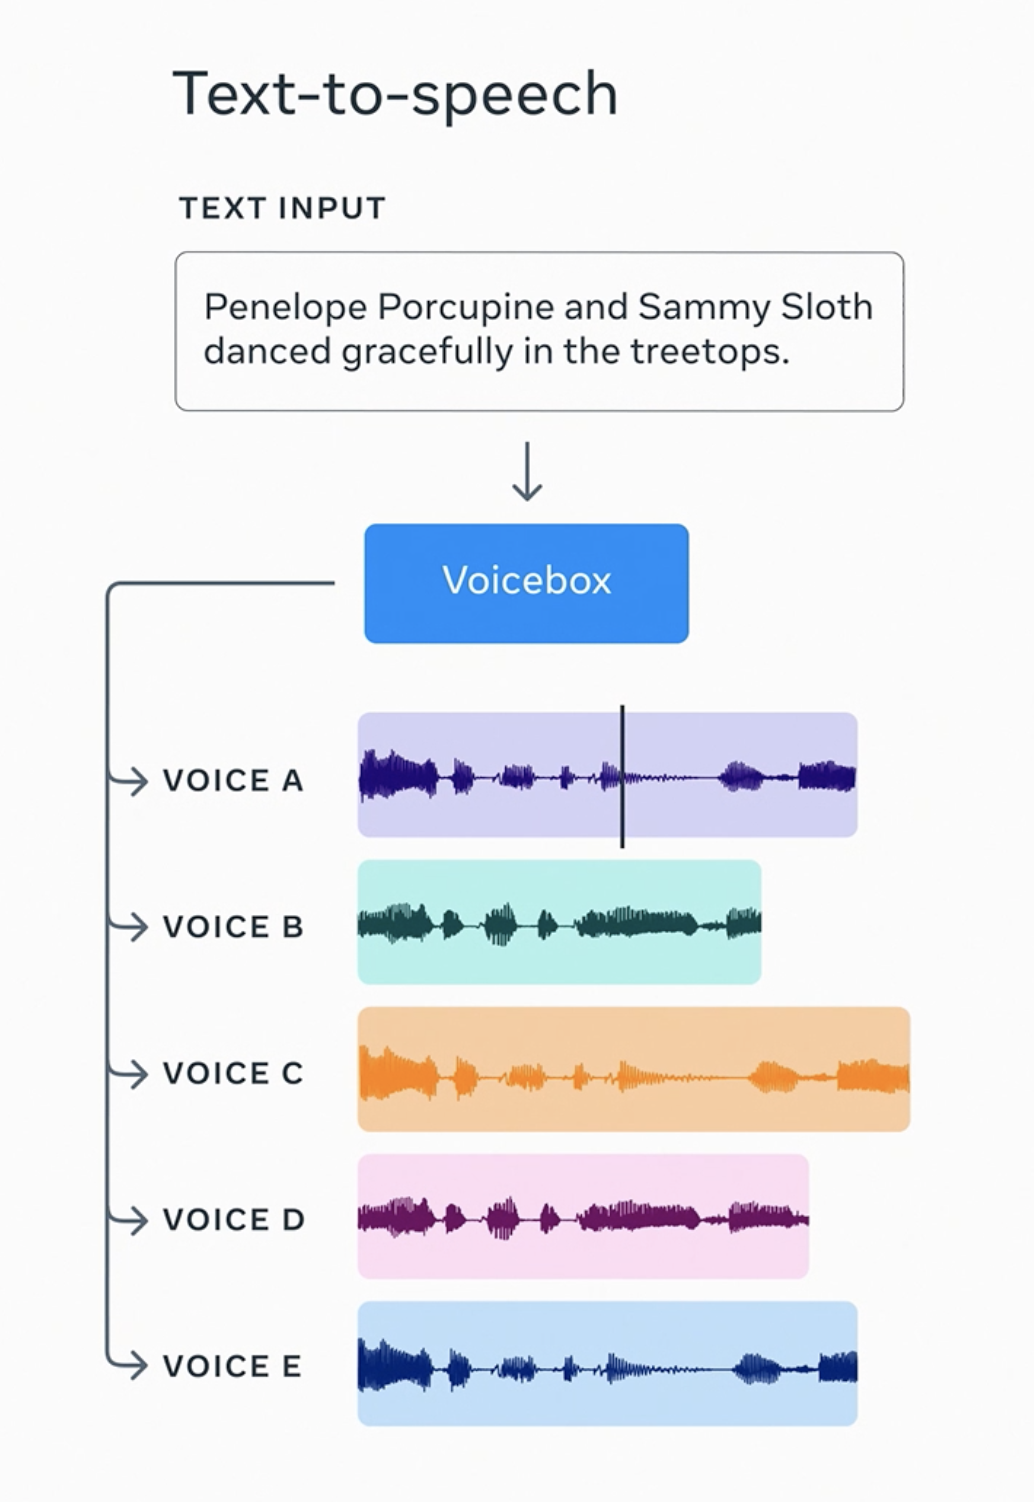 Meta 推出全能语音生成 AI 模型 Voicebox 支持六种语言和多种语音处理功能